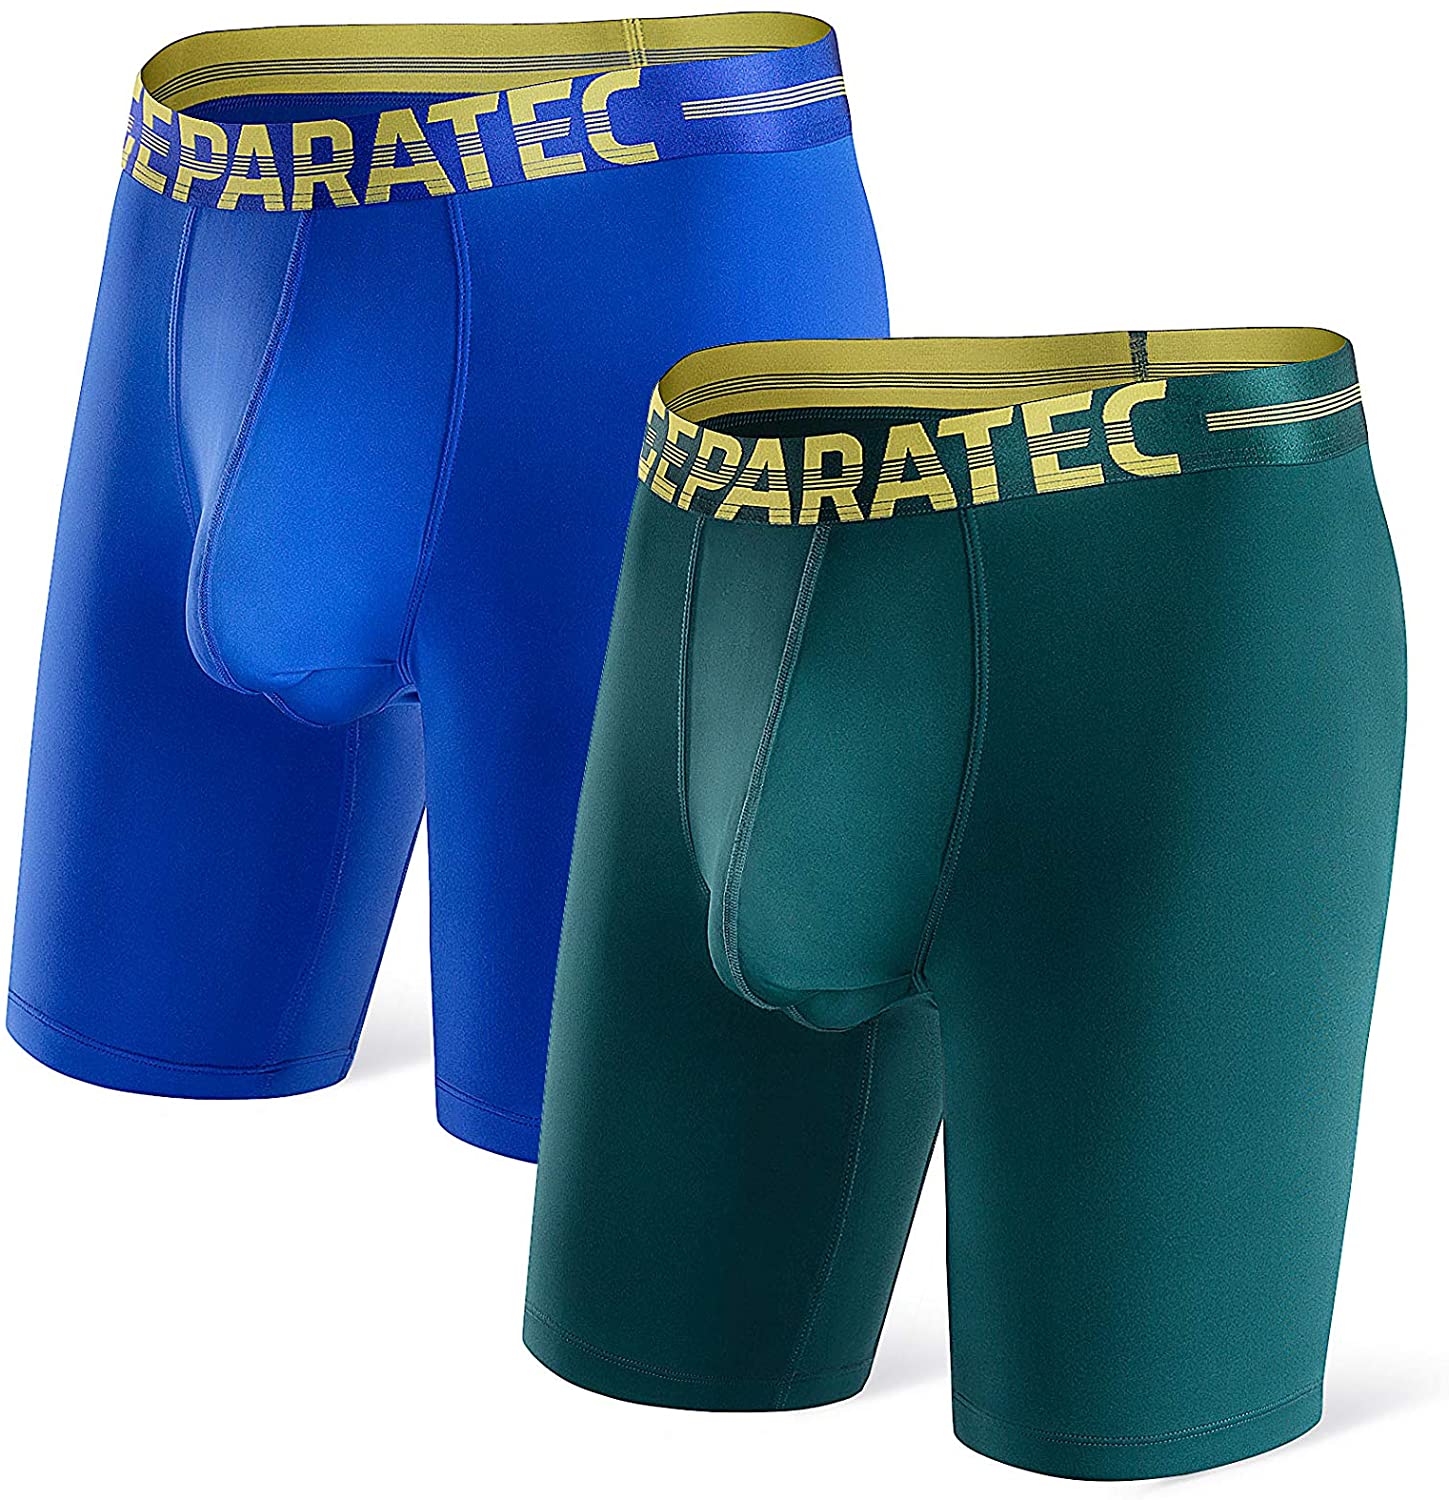 Separatec Men's Athletic Cool Mesh Fast Dry Long Leg Boxer Briefs